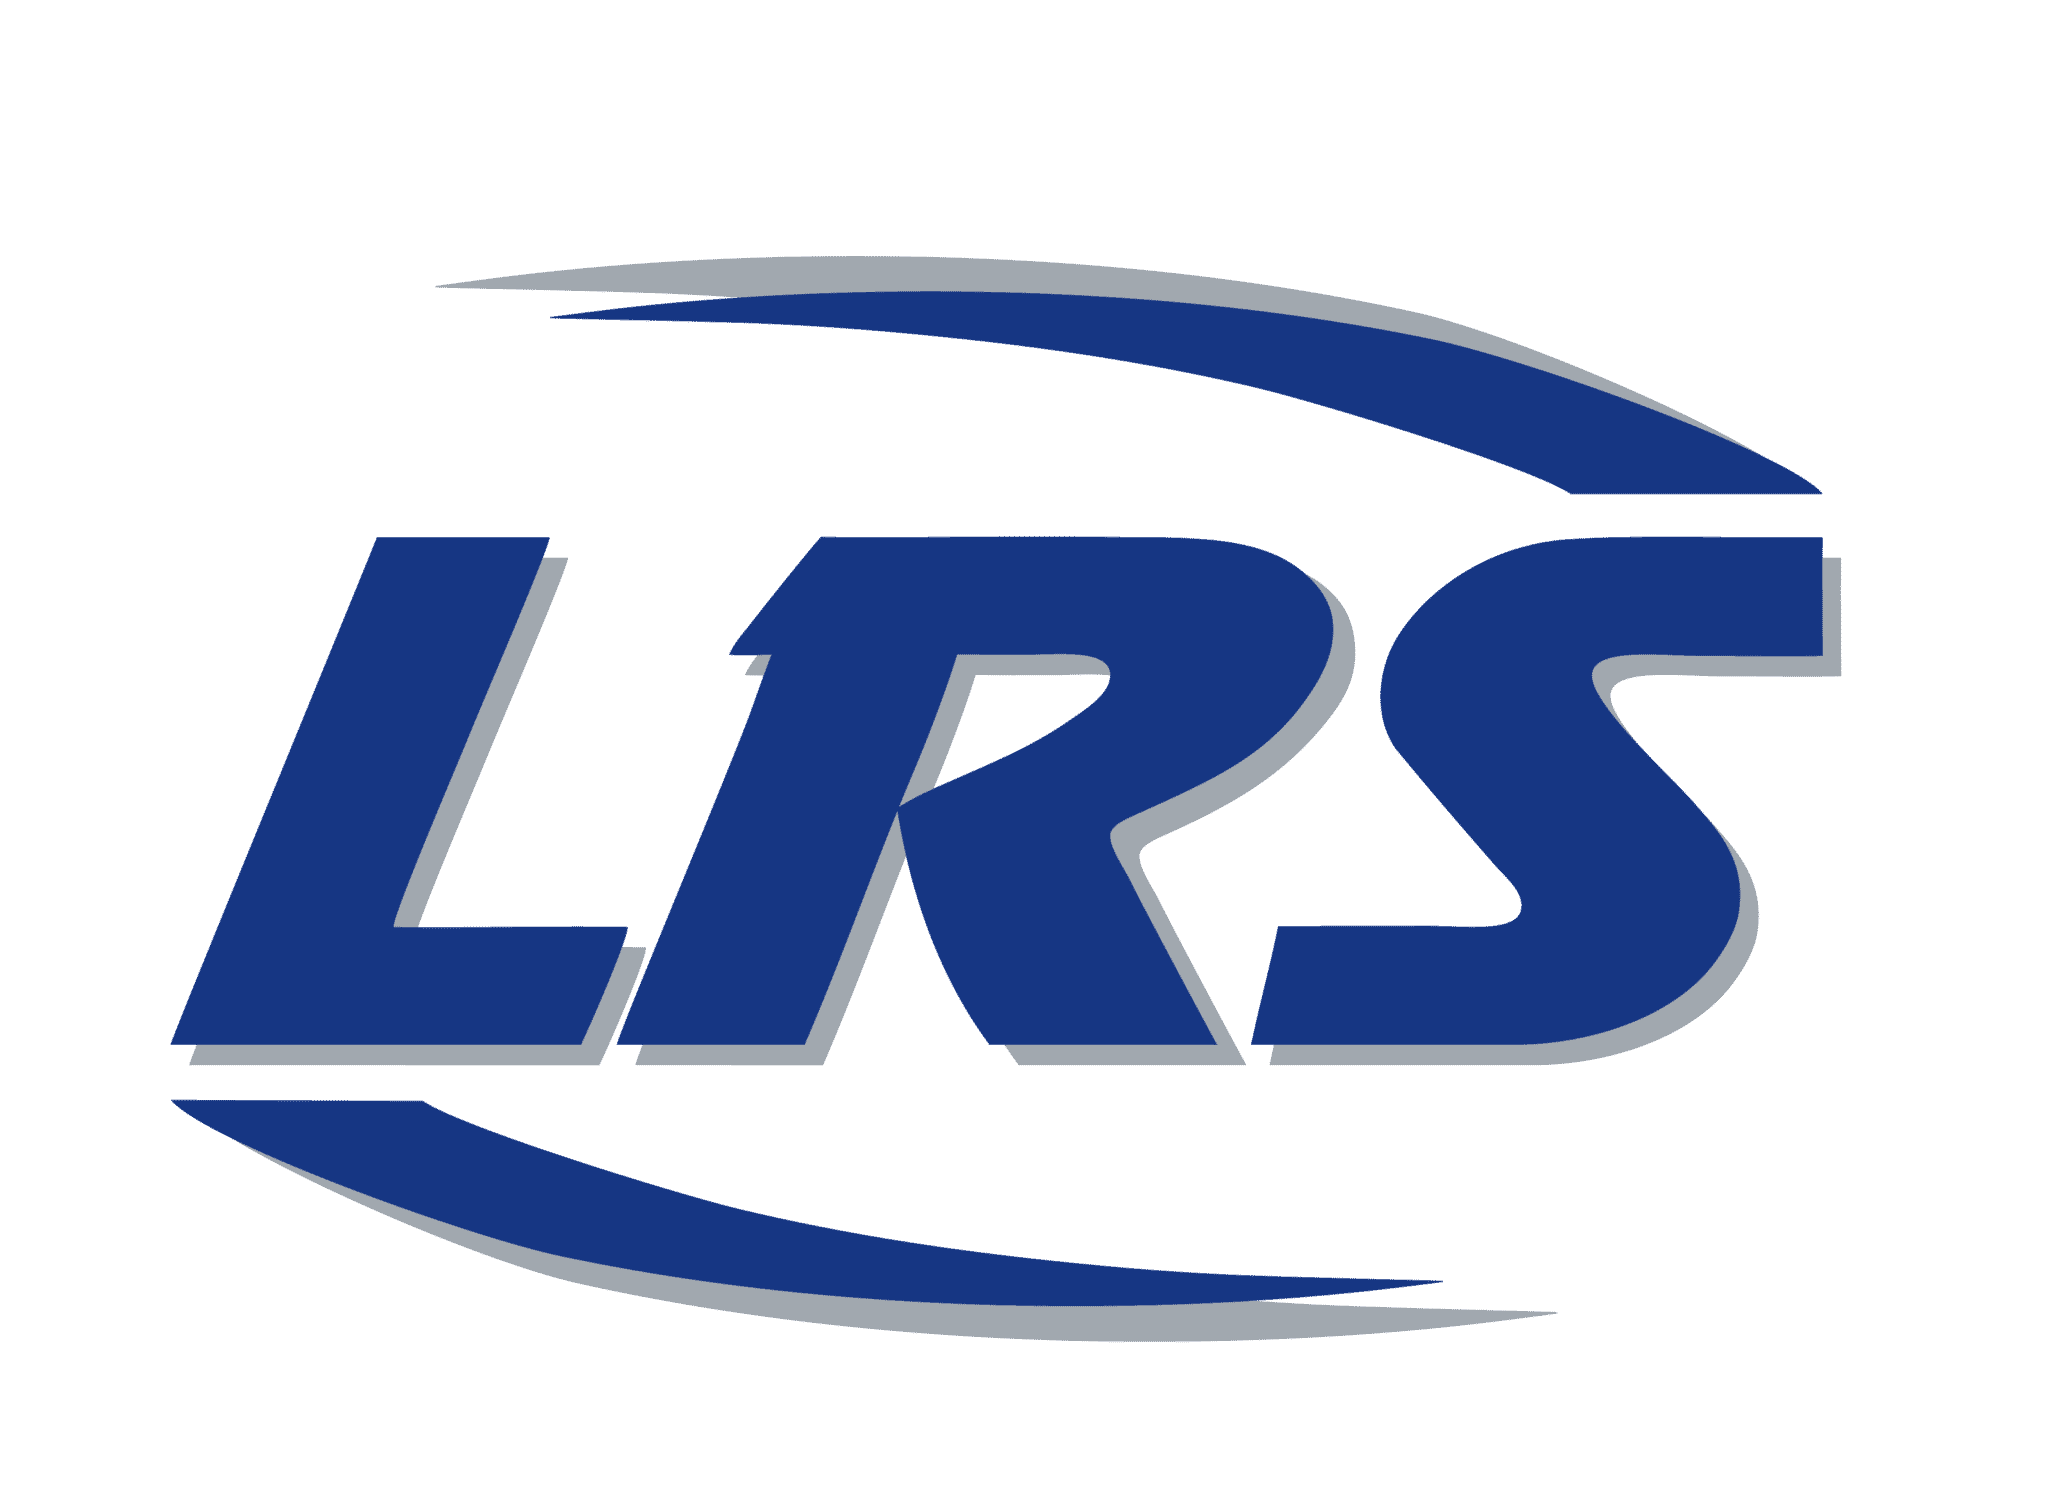 LRS Logo